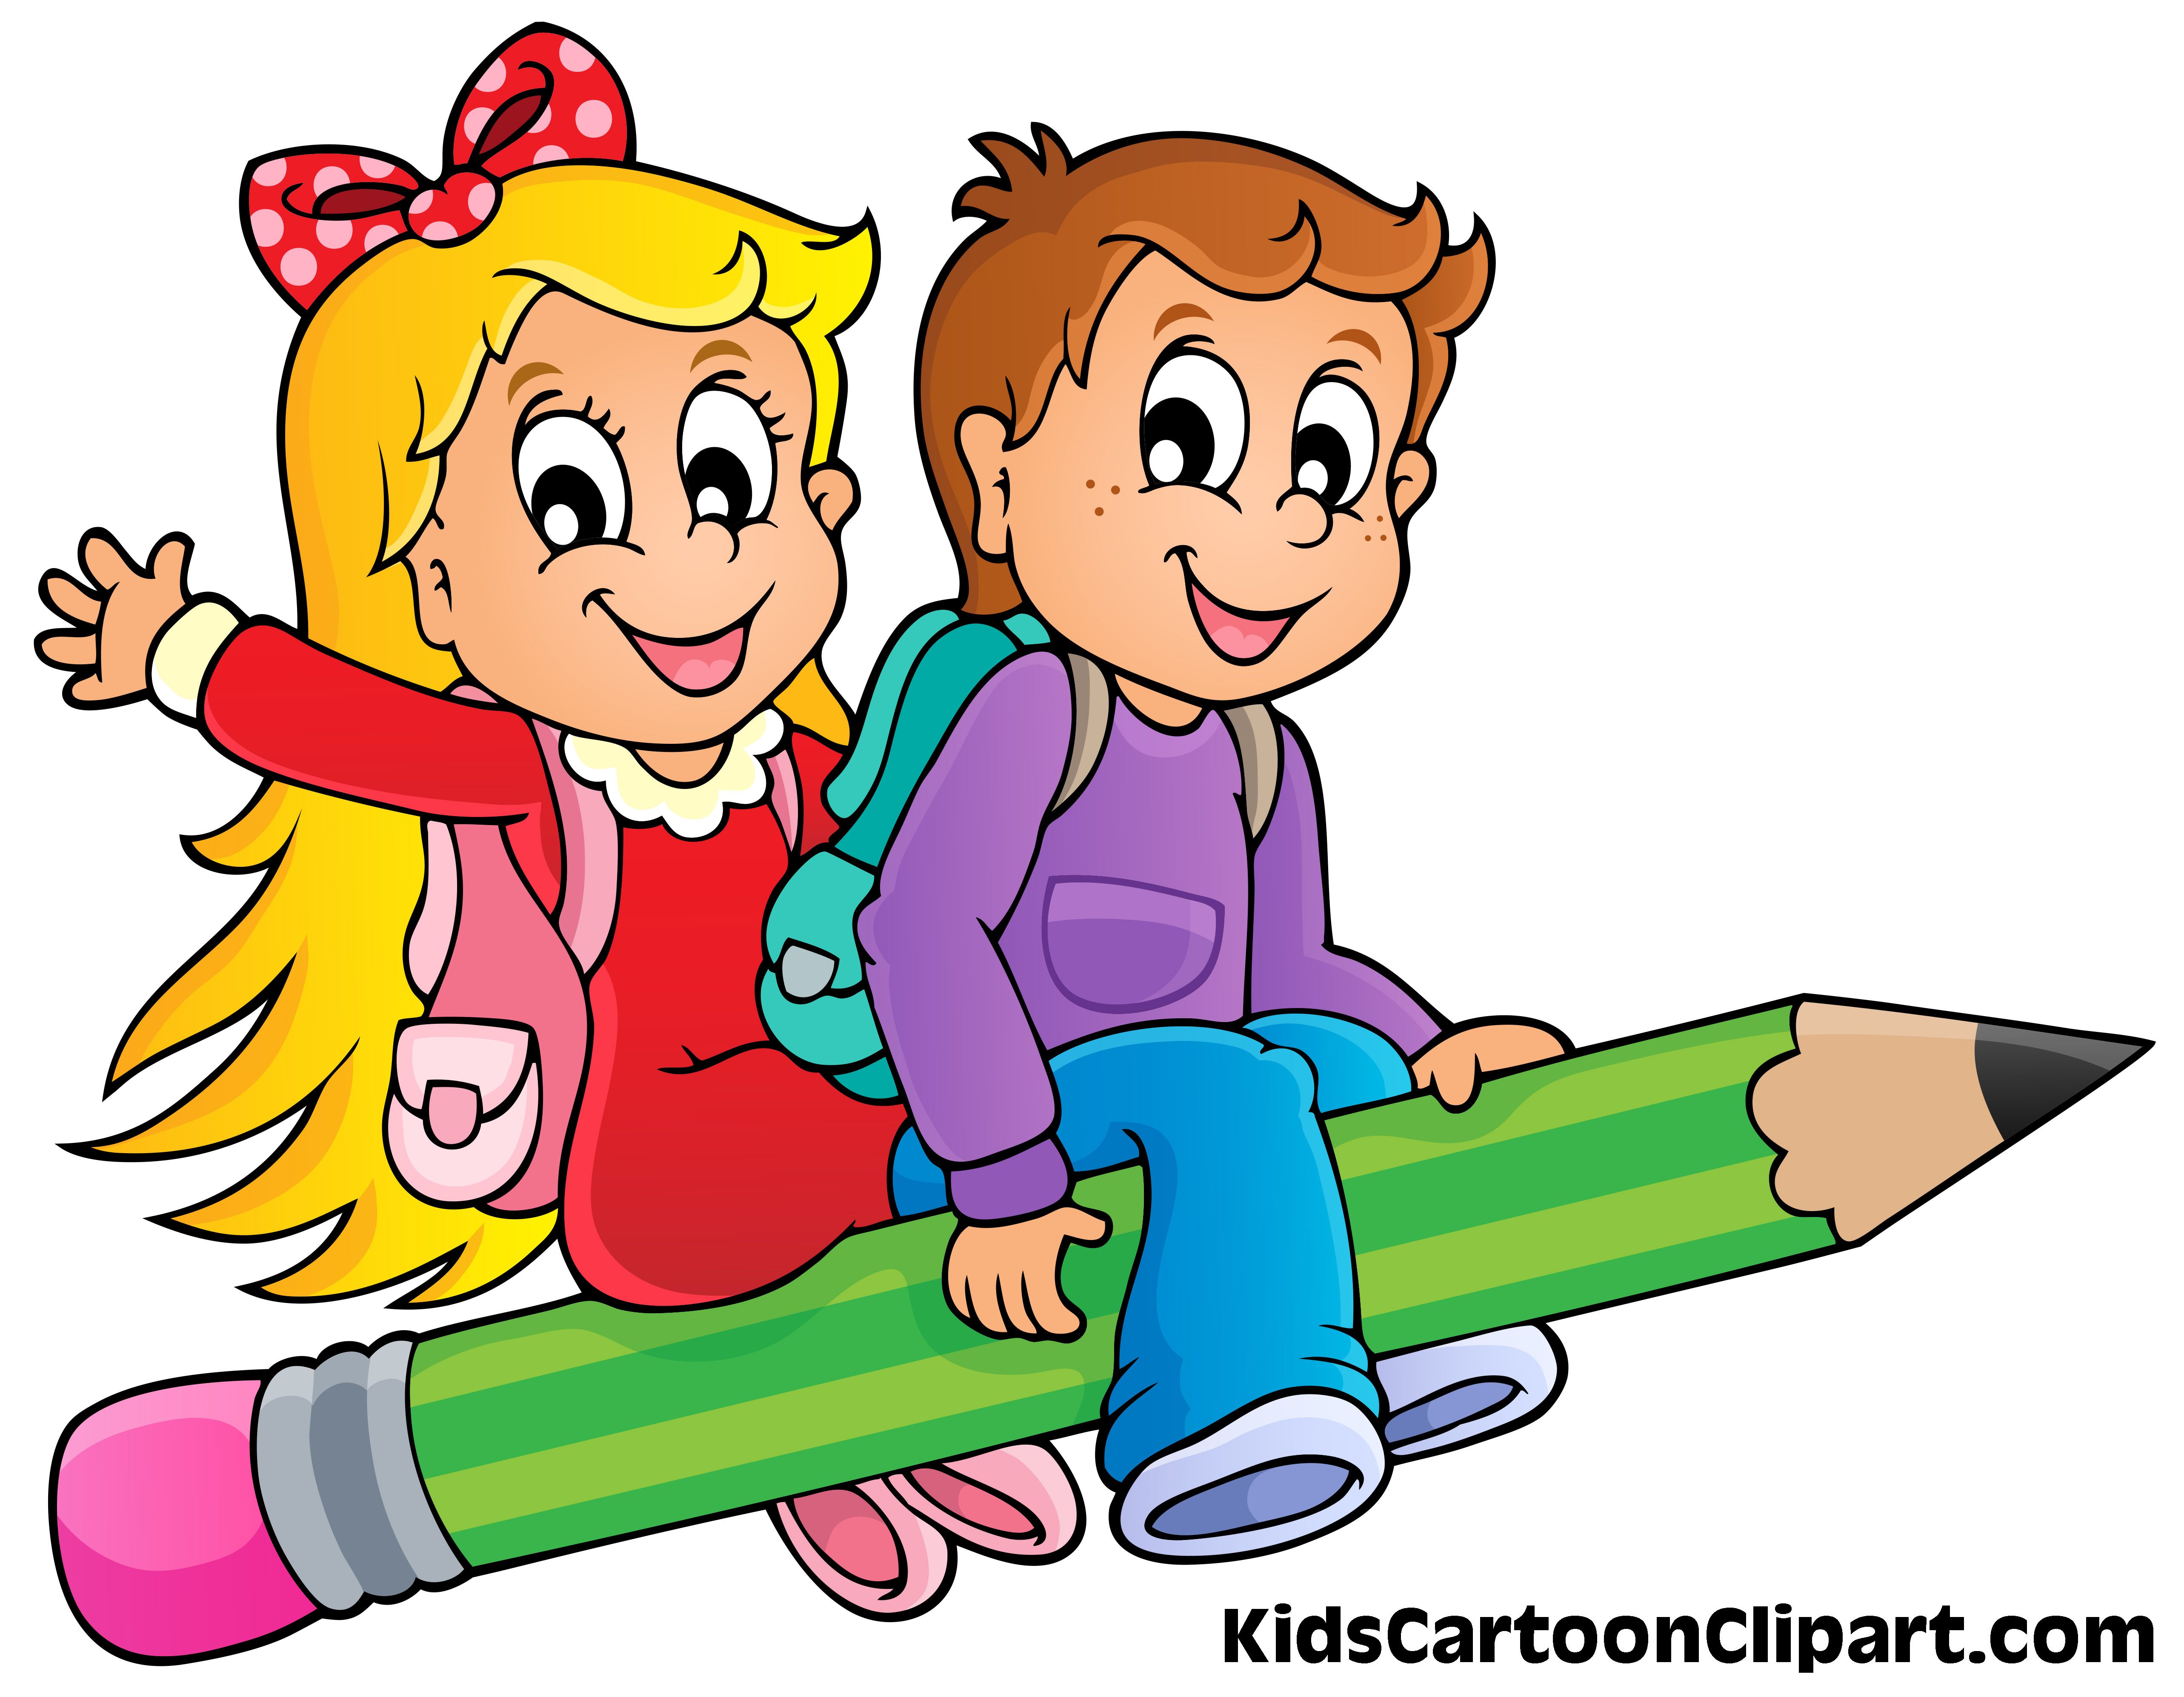 A Cute Boy and Girl Cartoon Flying on Pencil with School Bag